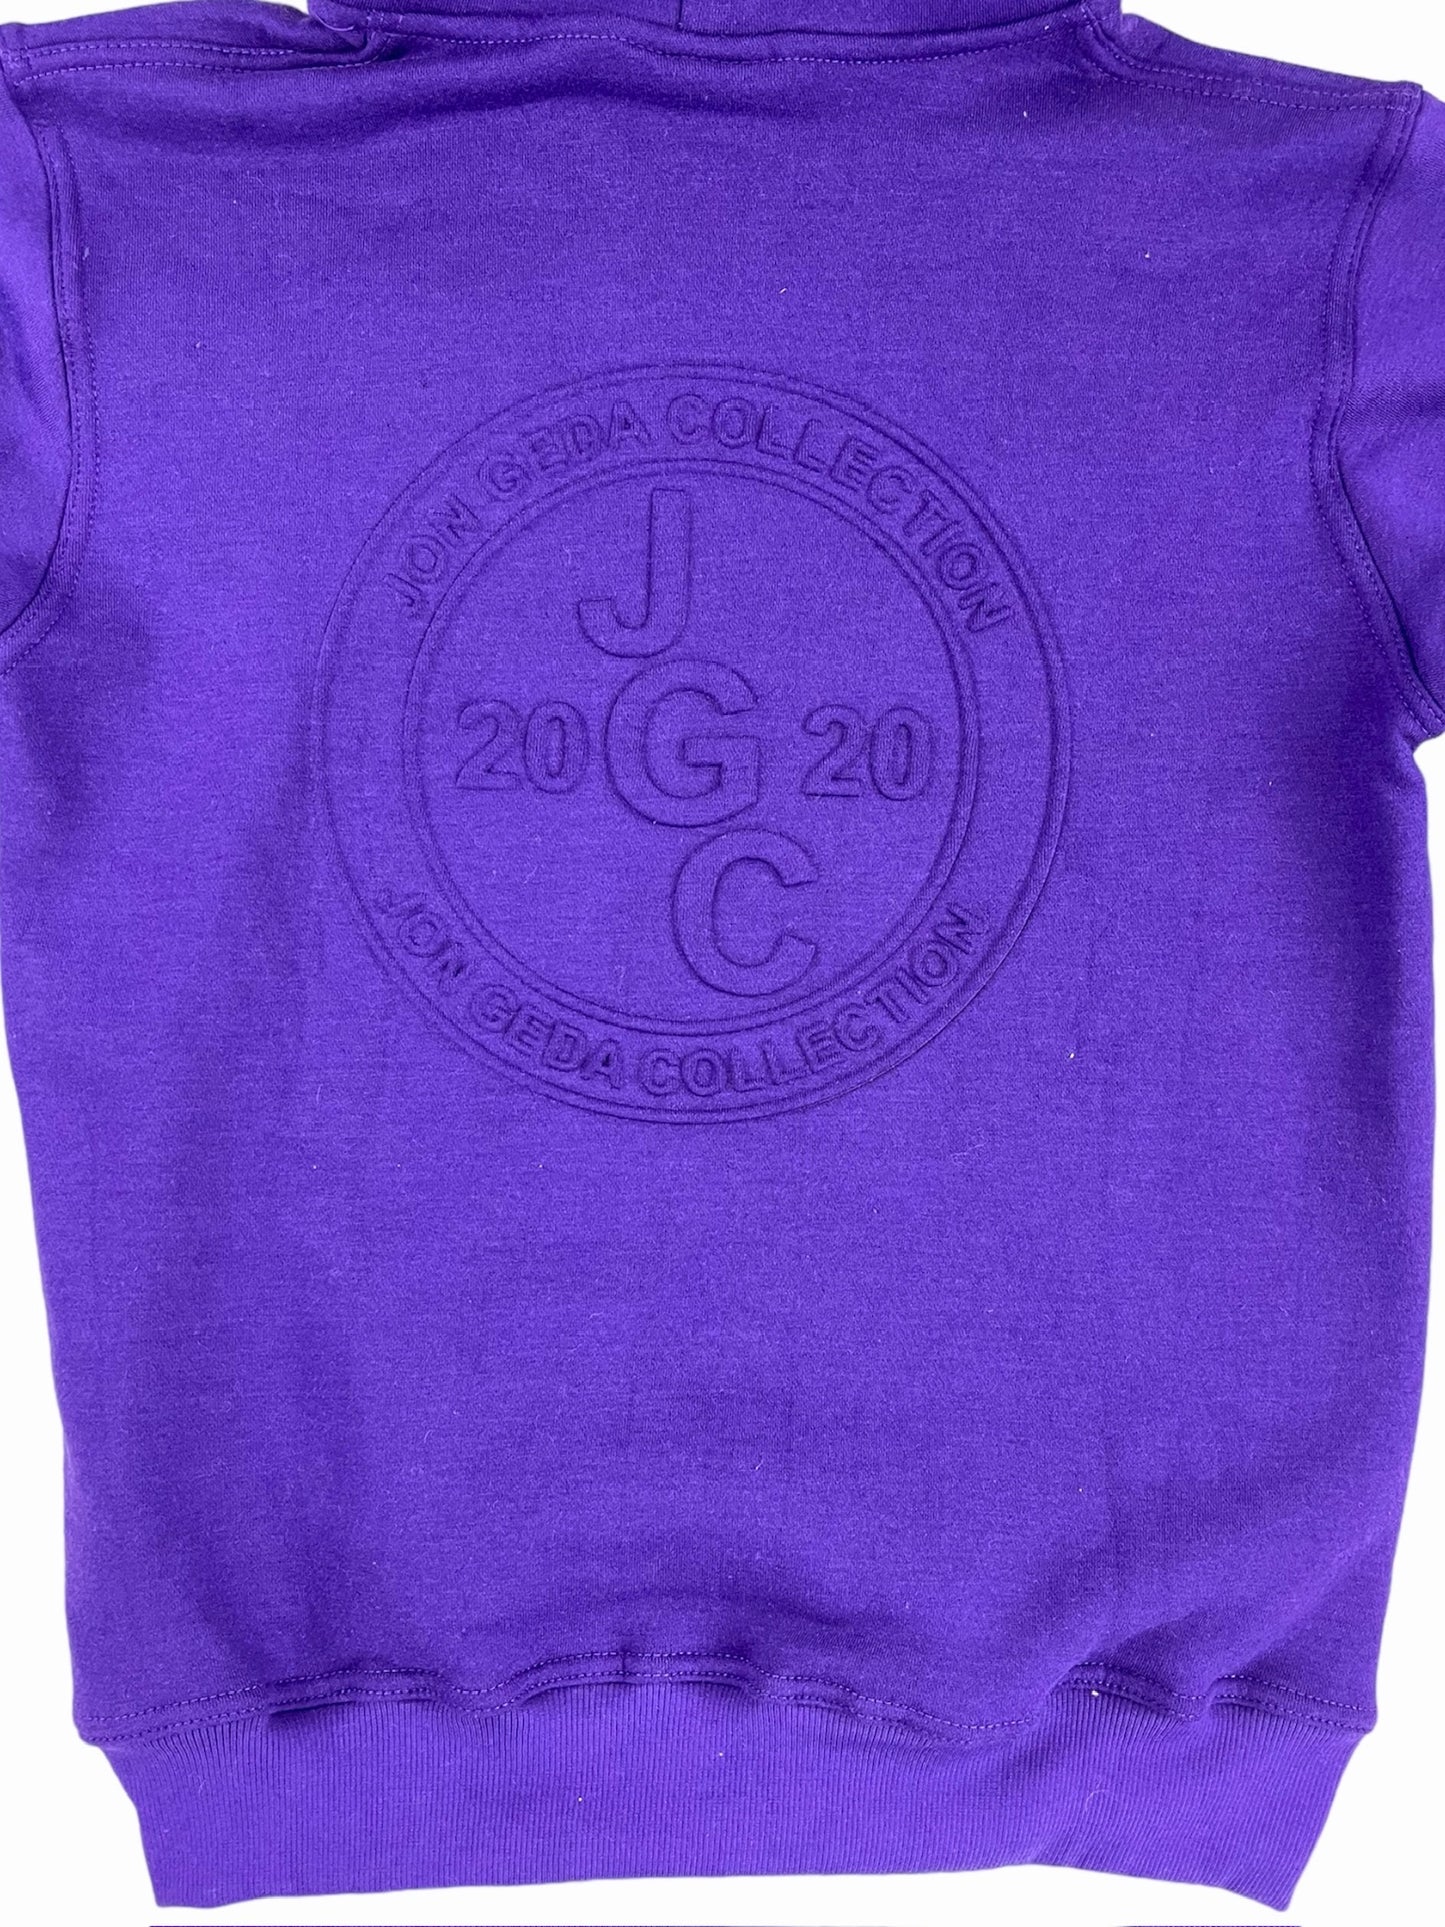 Jon Geda Pullover Sweatsuit (Purple)